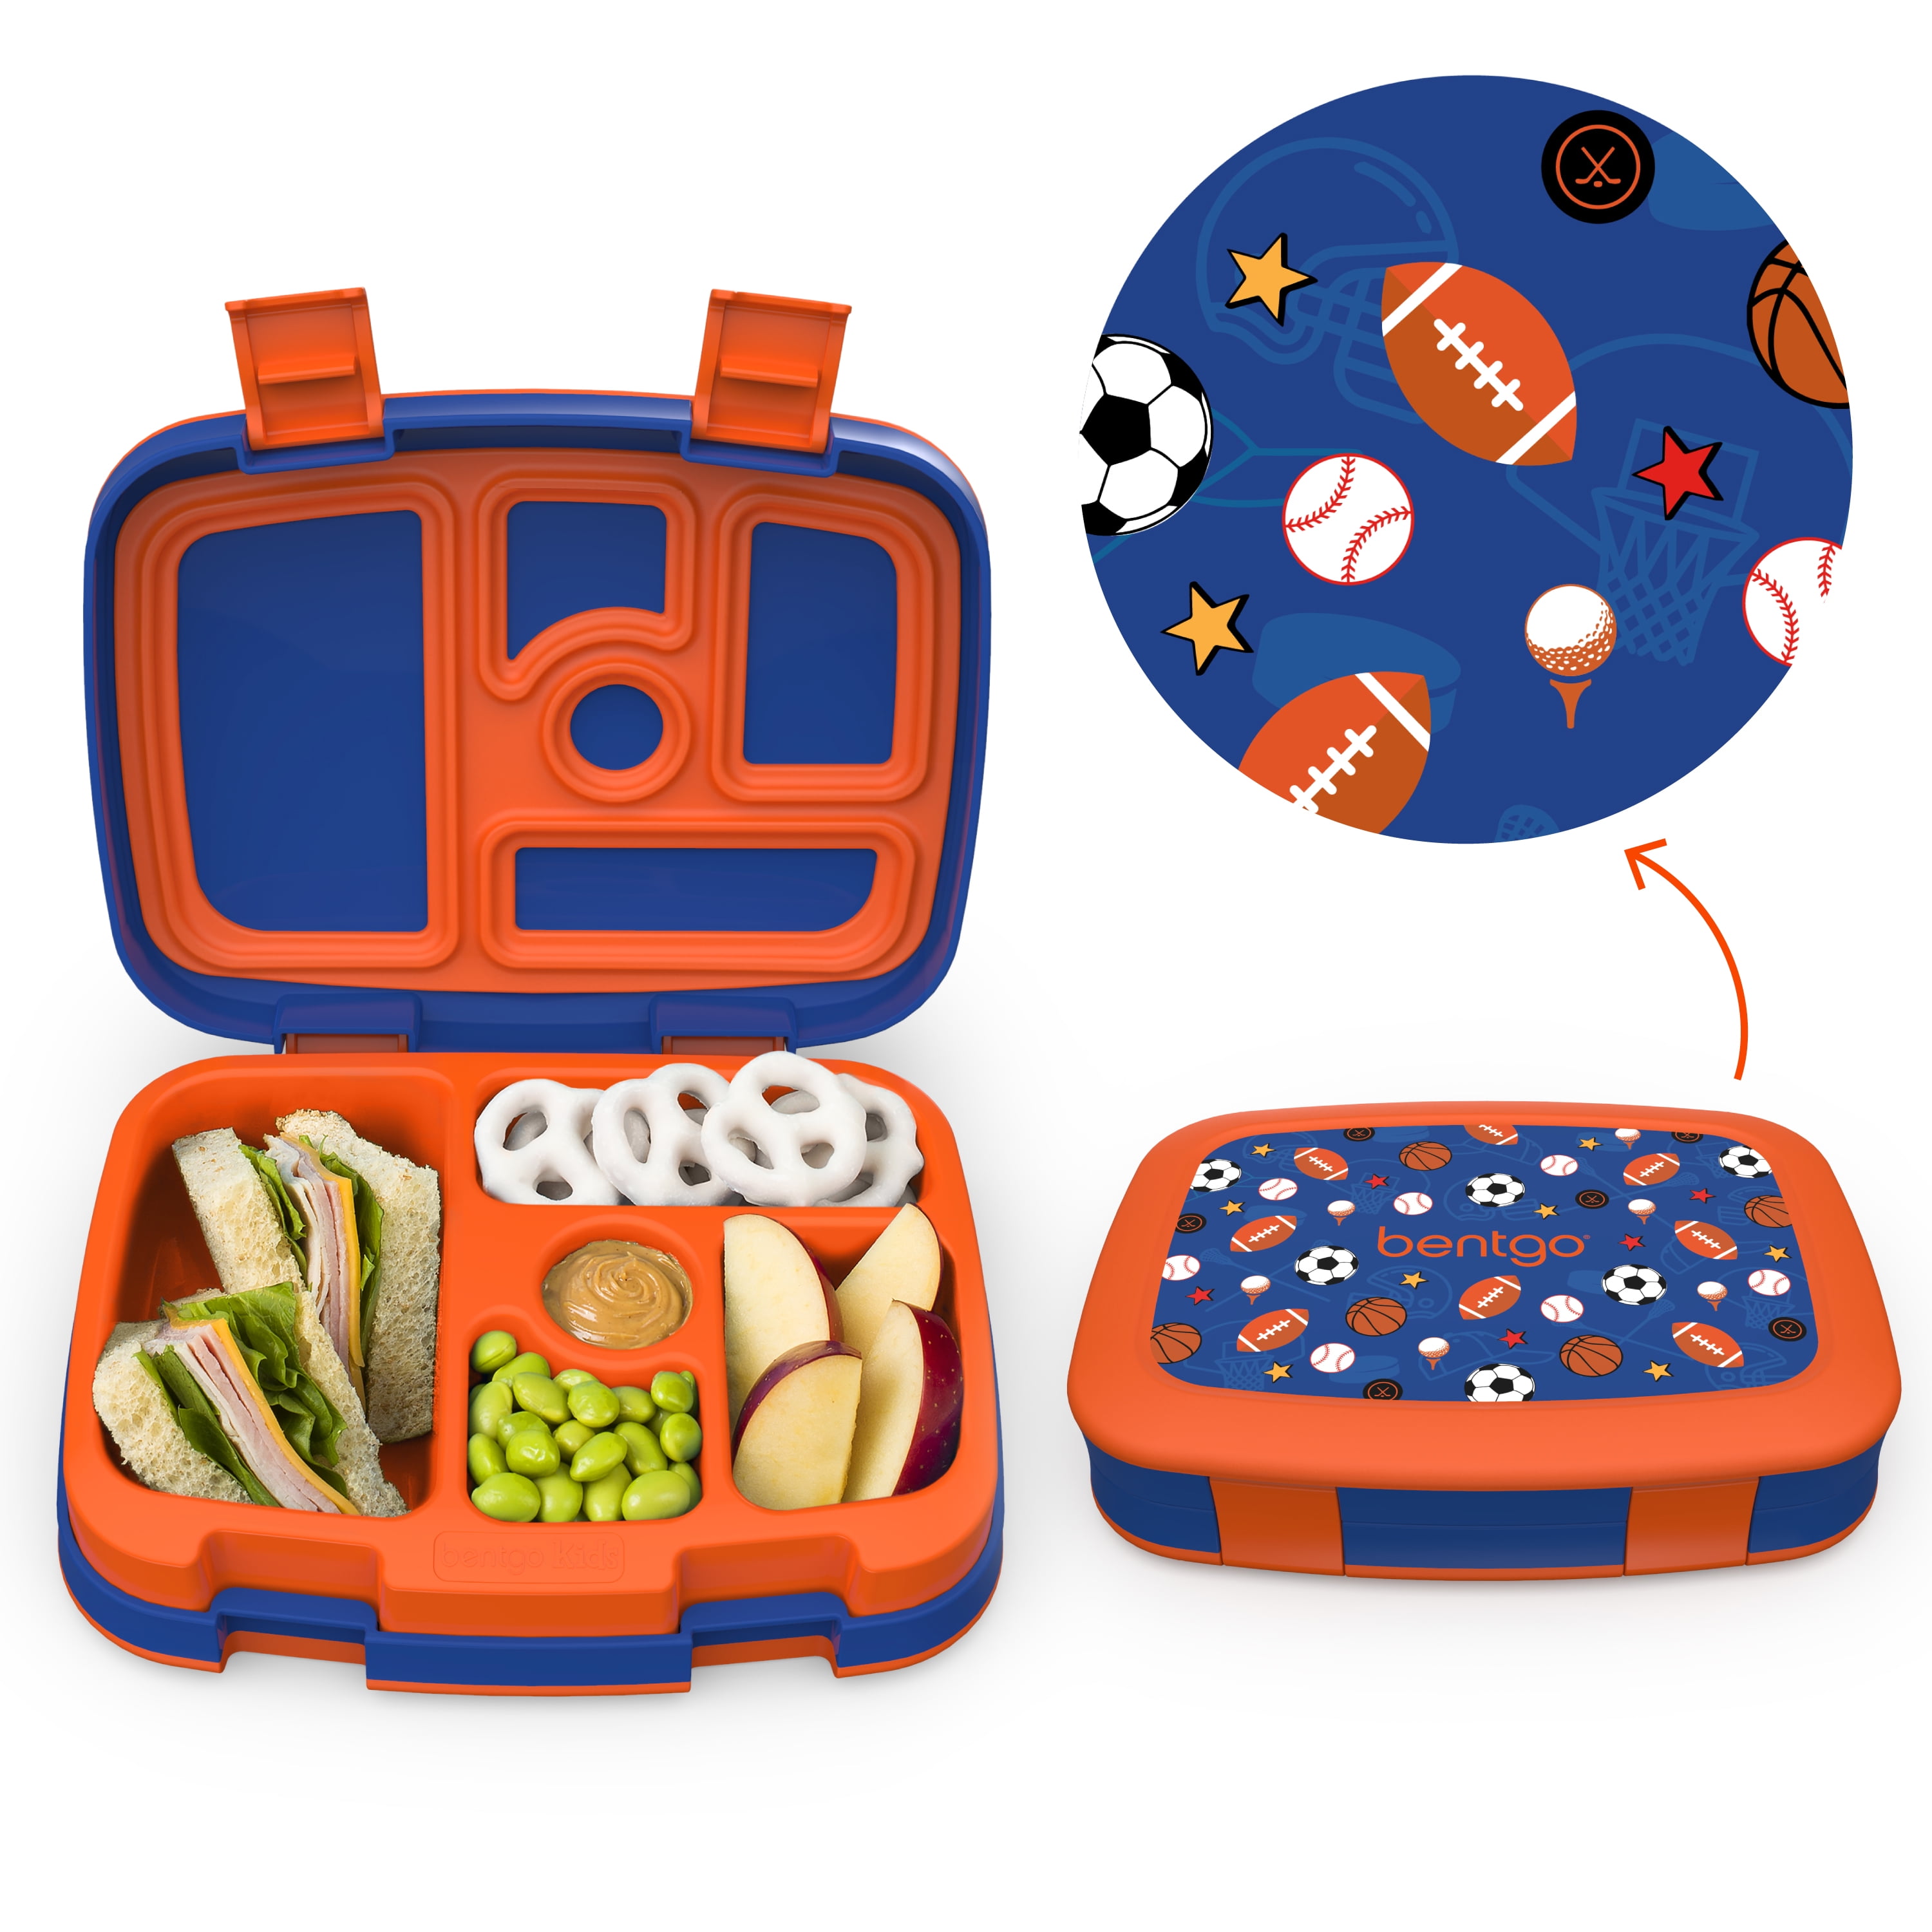 Bentgo Kids Leak-Proof, 5-Compartment Bento Style Kids Lunch Box NEW Purple  853975005026